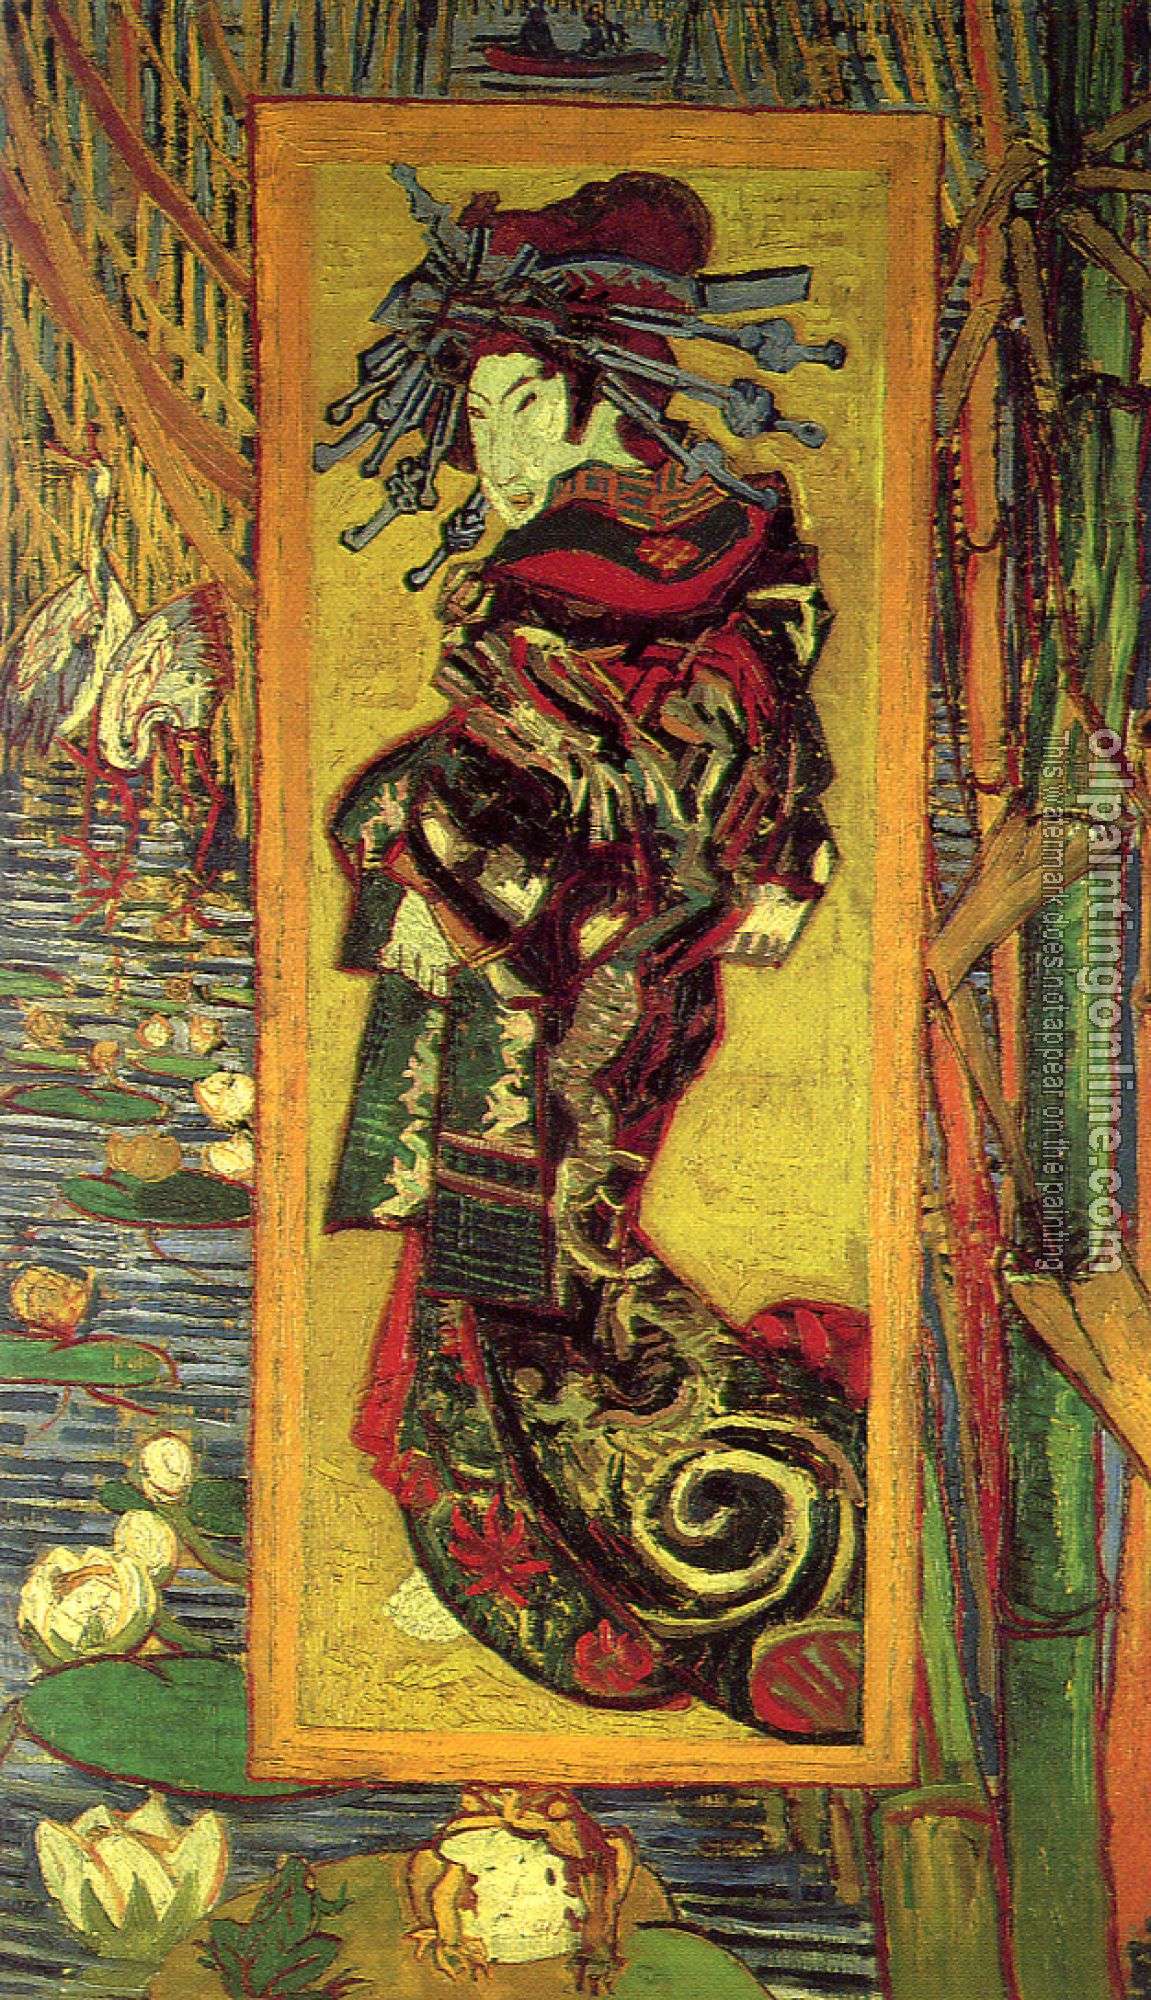 Gogh, Vincent van - Japonaiserie:Oiran (after Kesai Eisen)